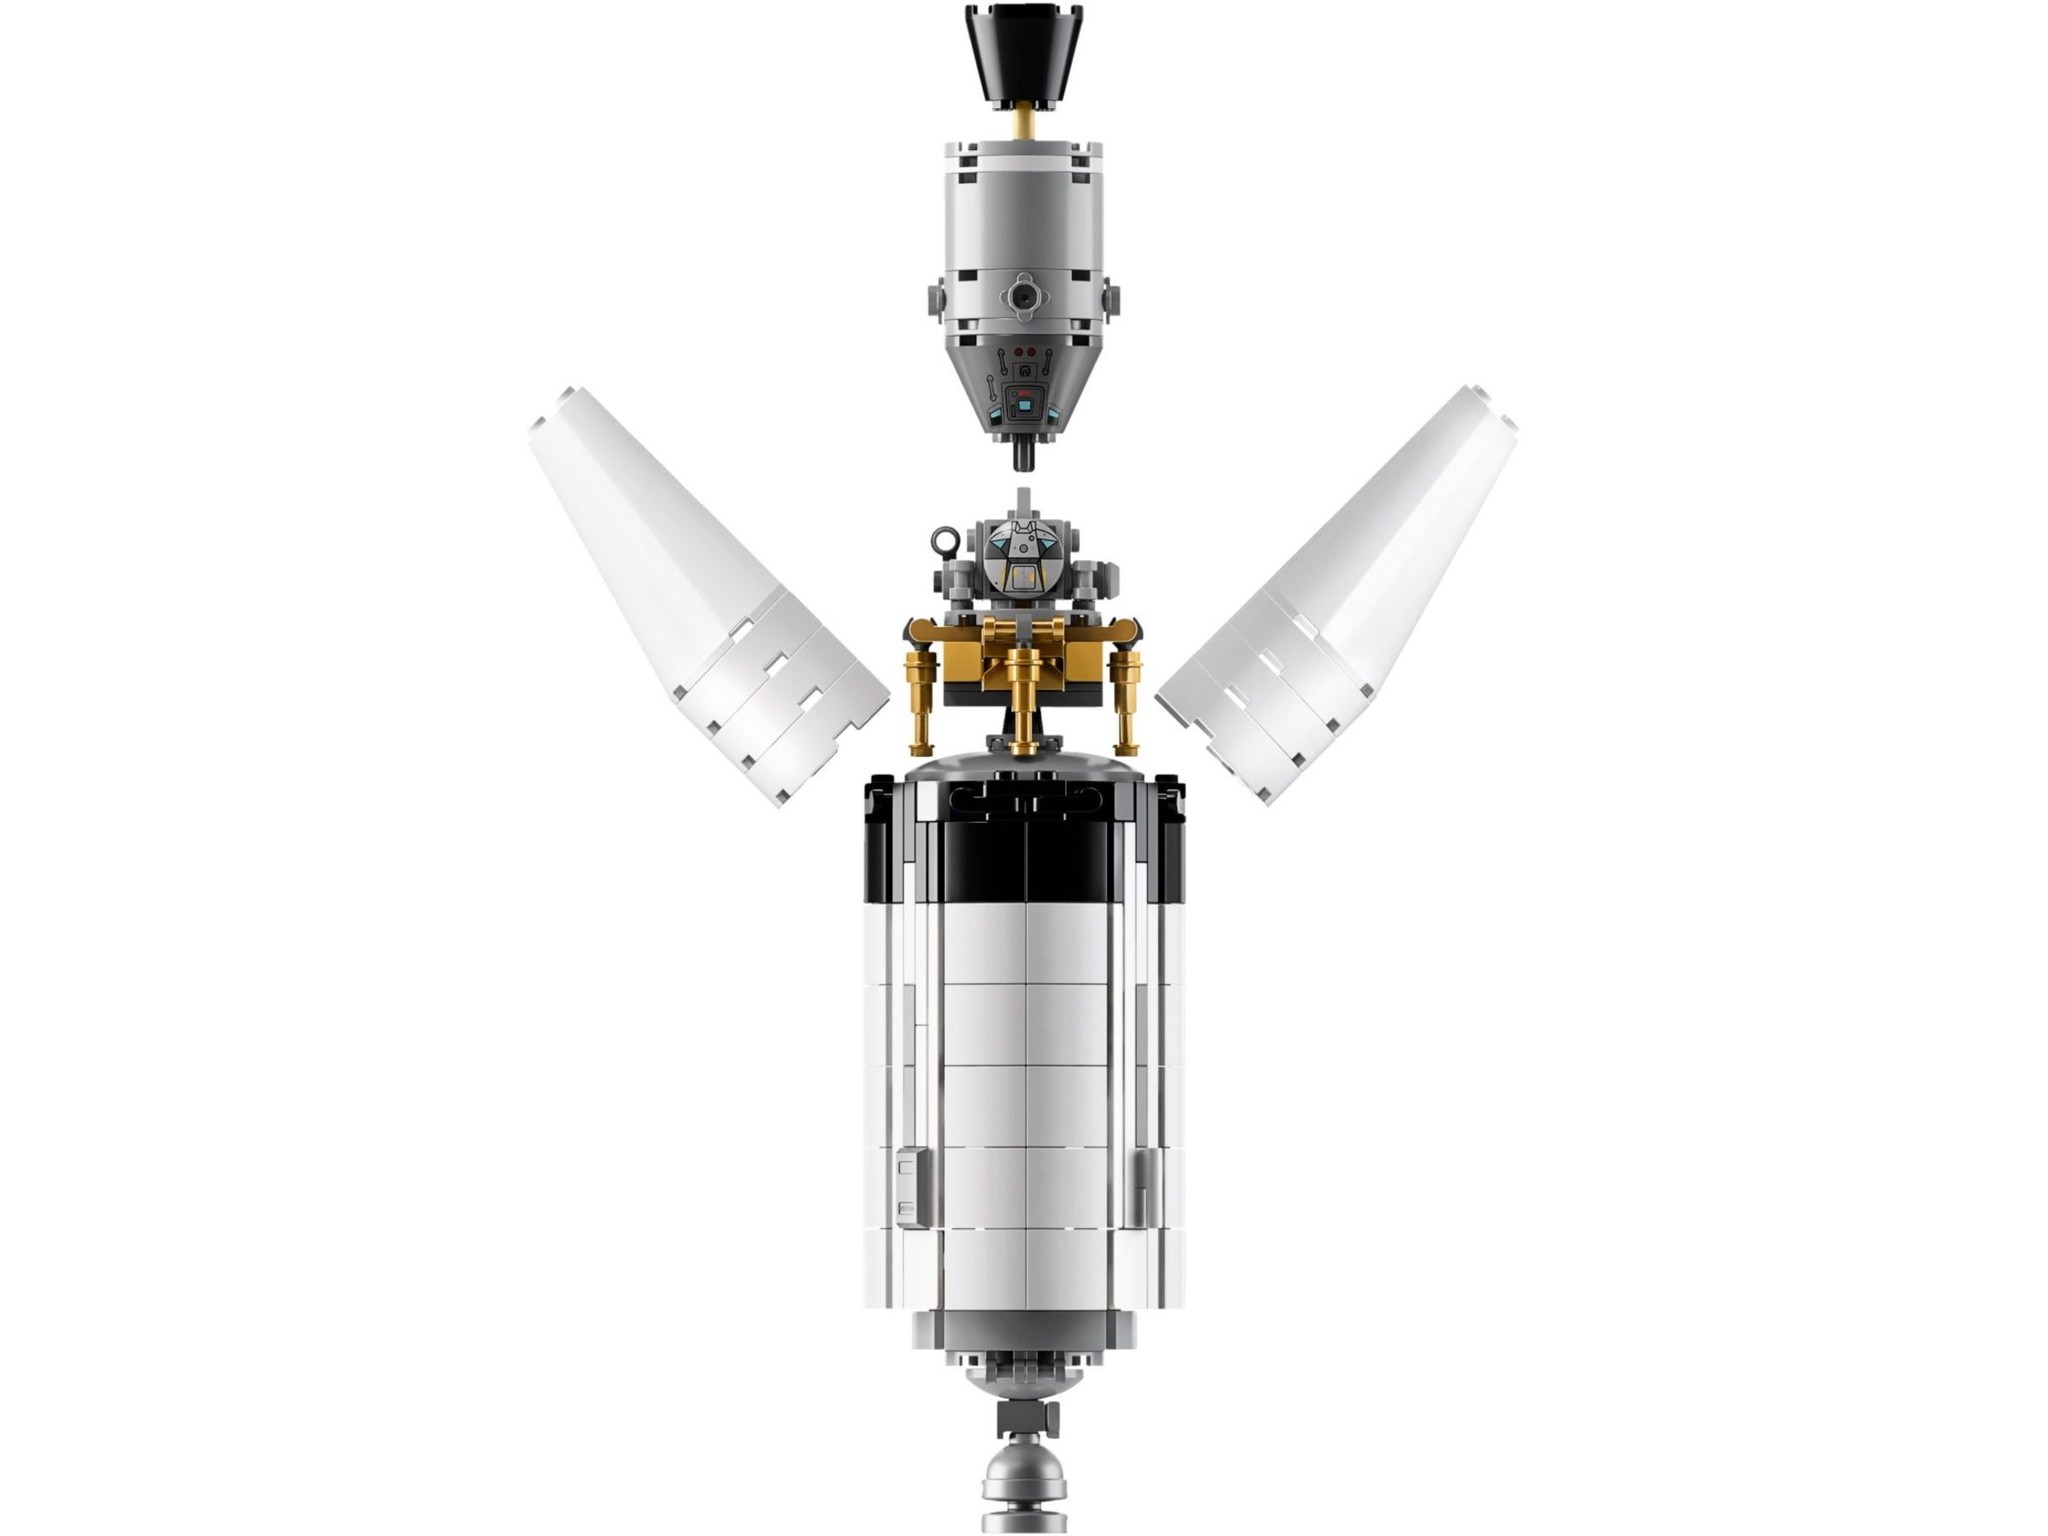 LEGO 92176 NASA Apollo Saturn V huren? | Bricks Verhuur